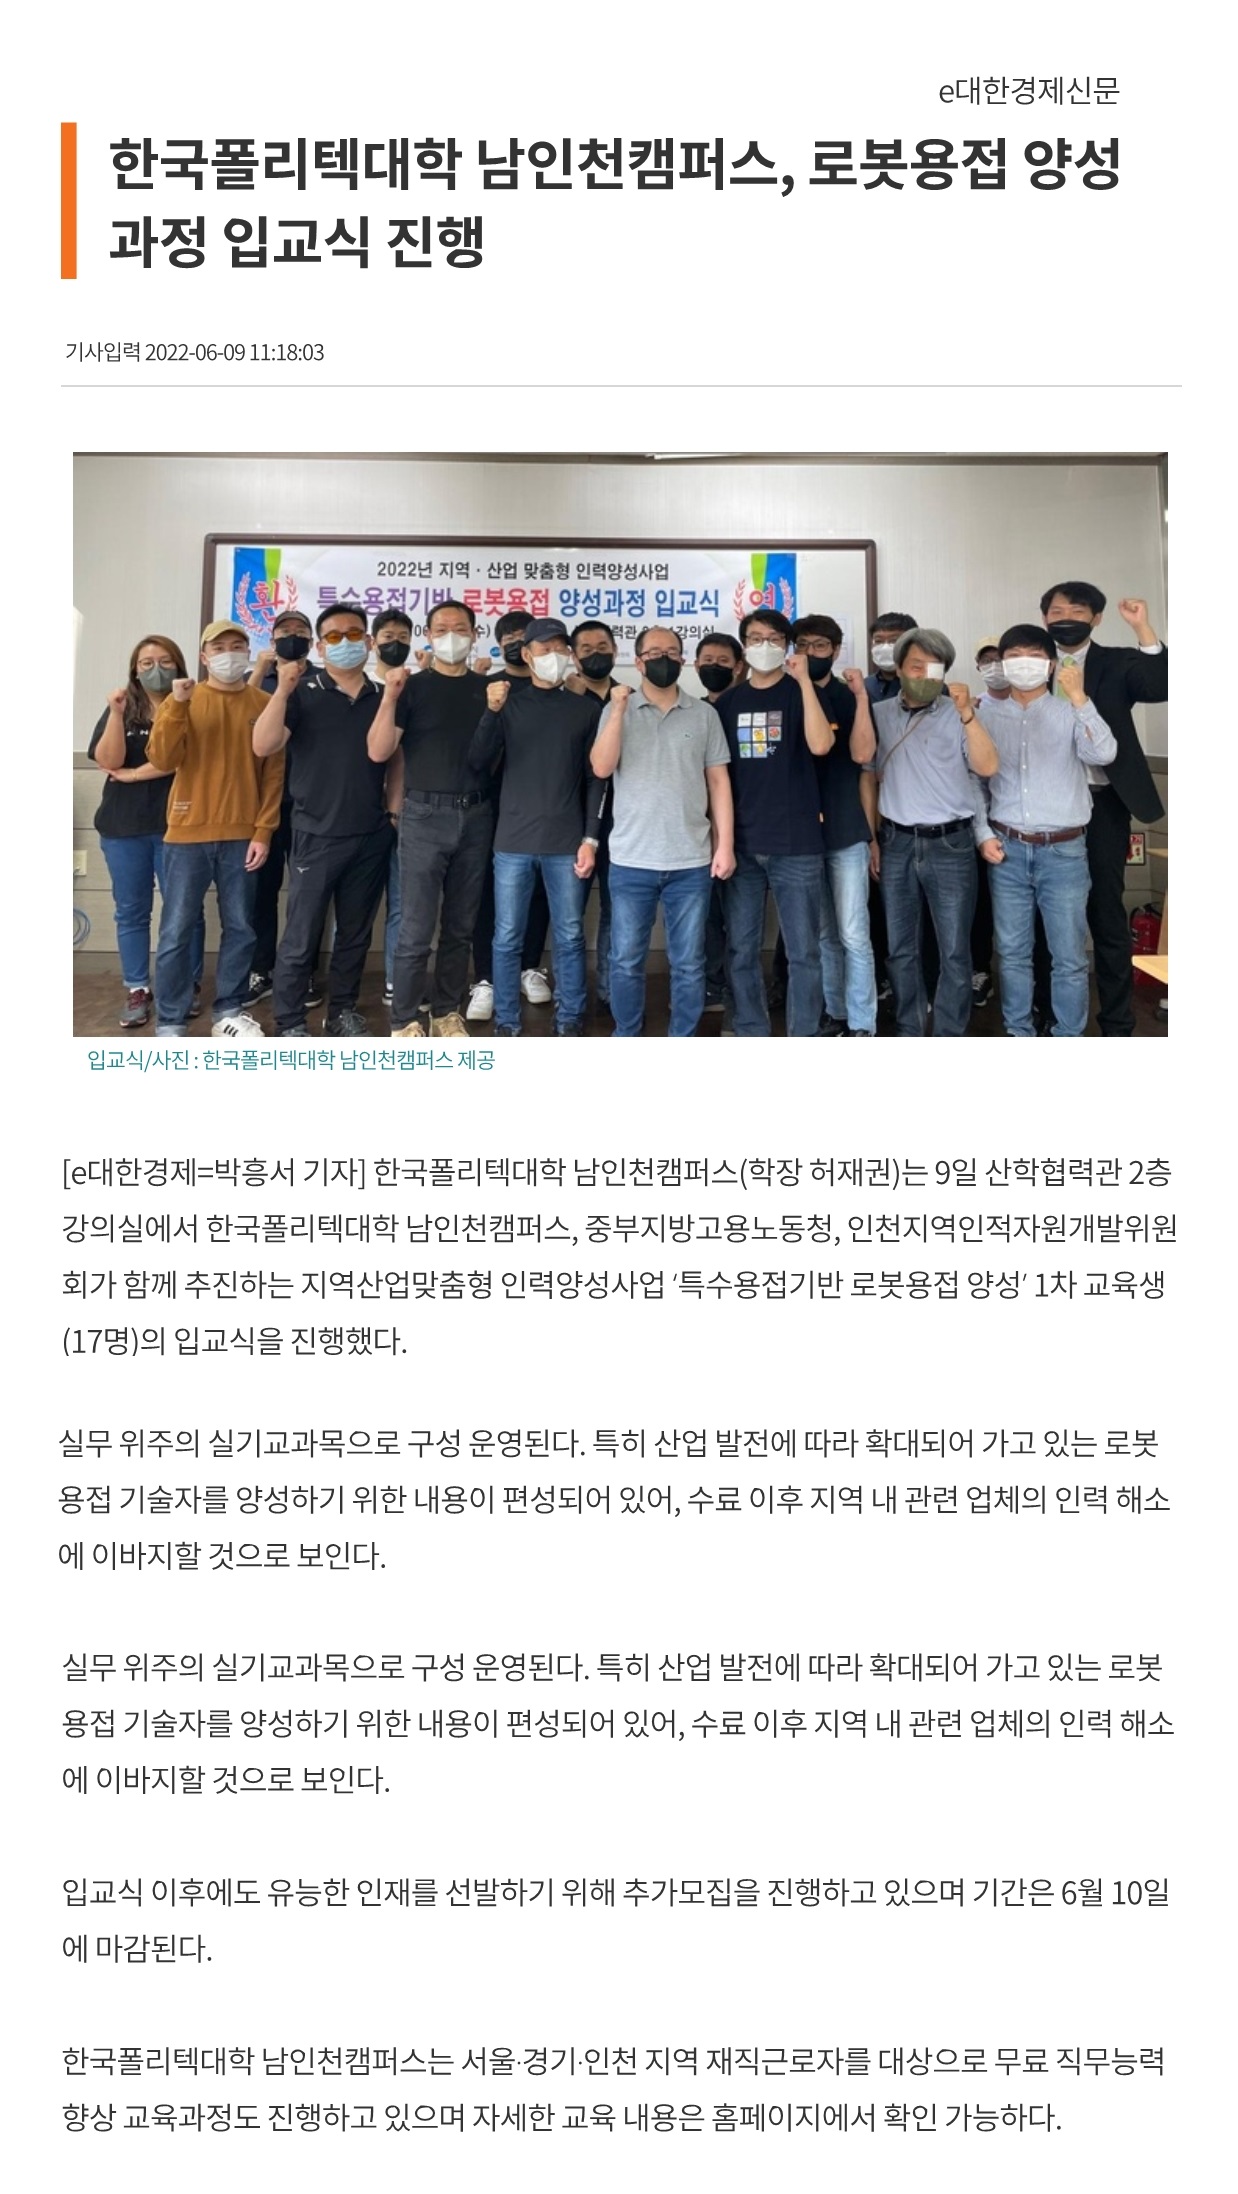 220609_e대한경제_한국폴리텍대학 남인천캠퍼스, 로봇용접 양성과정 입교식 진행의 1번째 이미지